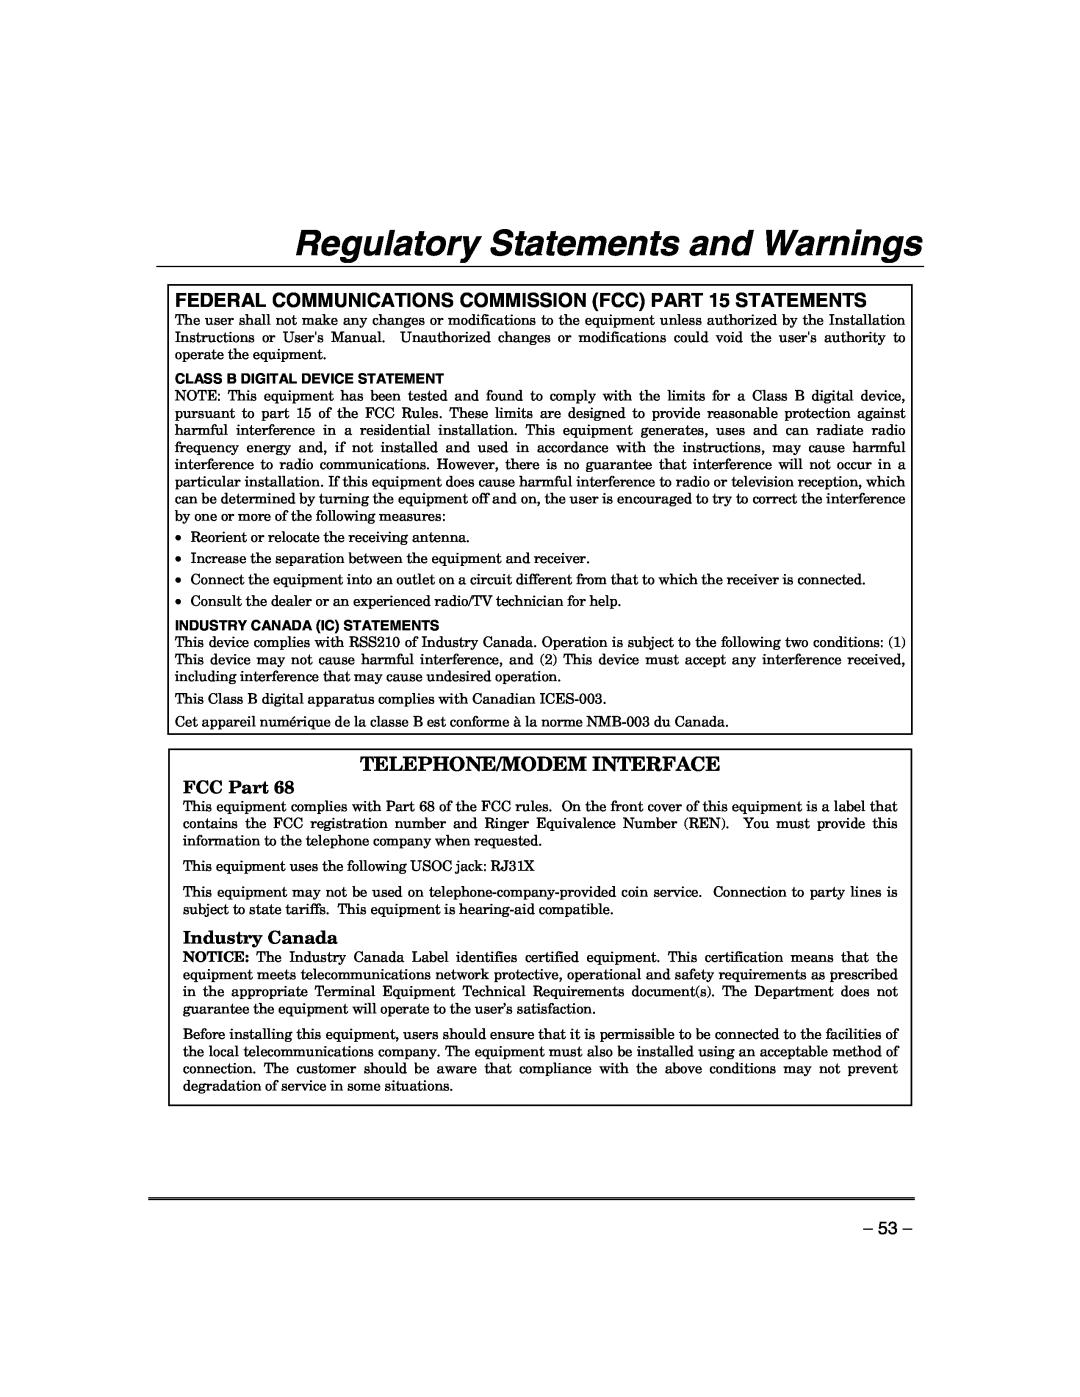 Honeywell VISTA-21IP manual Regulatory Statements and Warnings, FCC Part, Industry Canada, Telephone/Modem Interface 